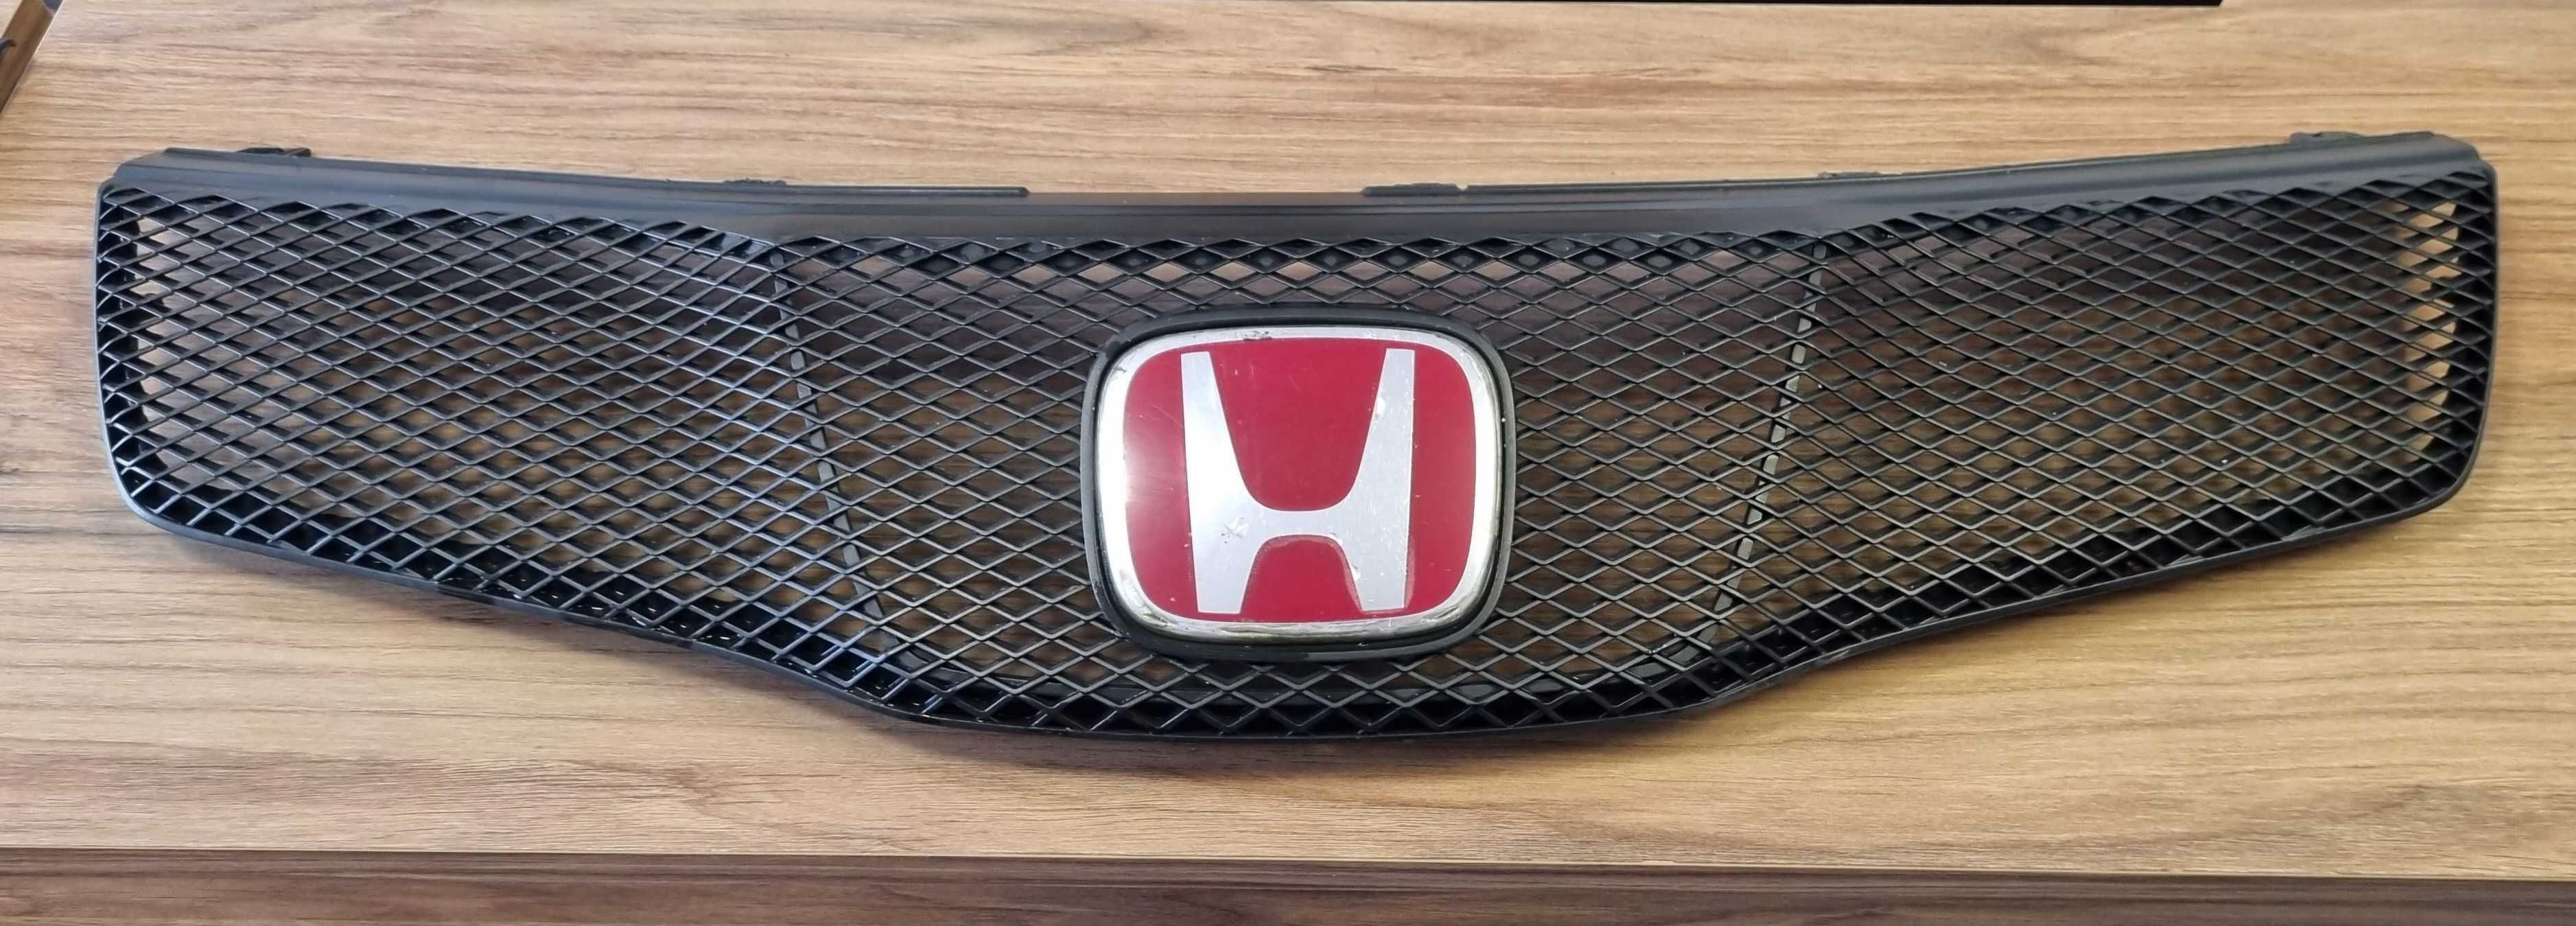 Honda Civic Type r Ufo civic 8 VIII atrapa grill